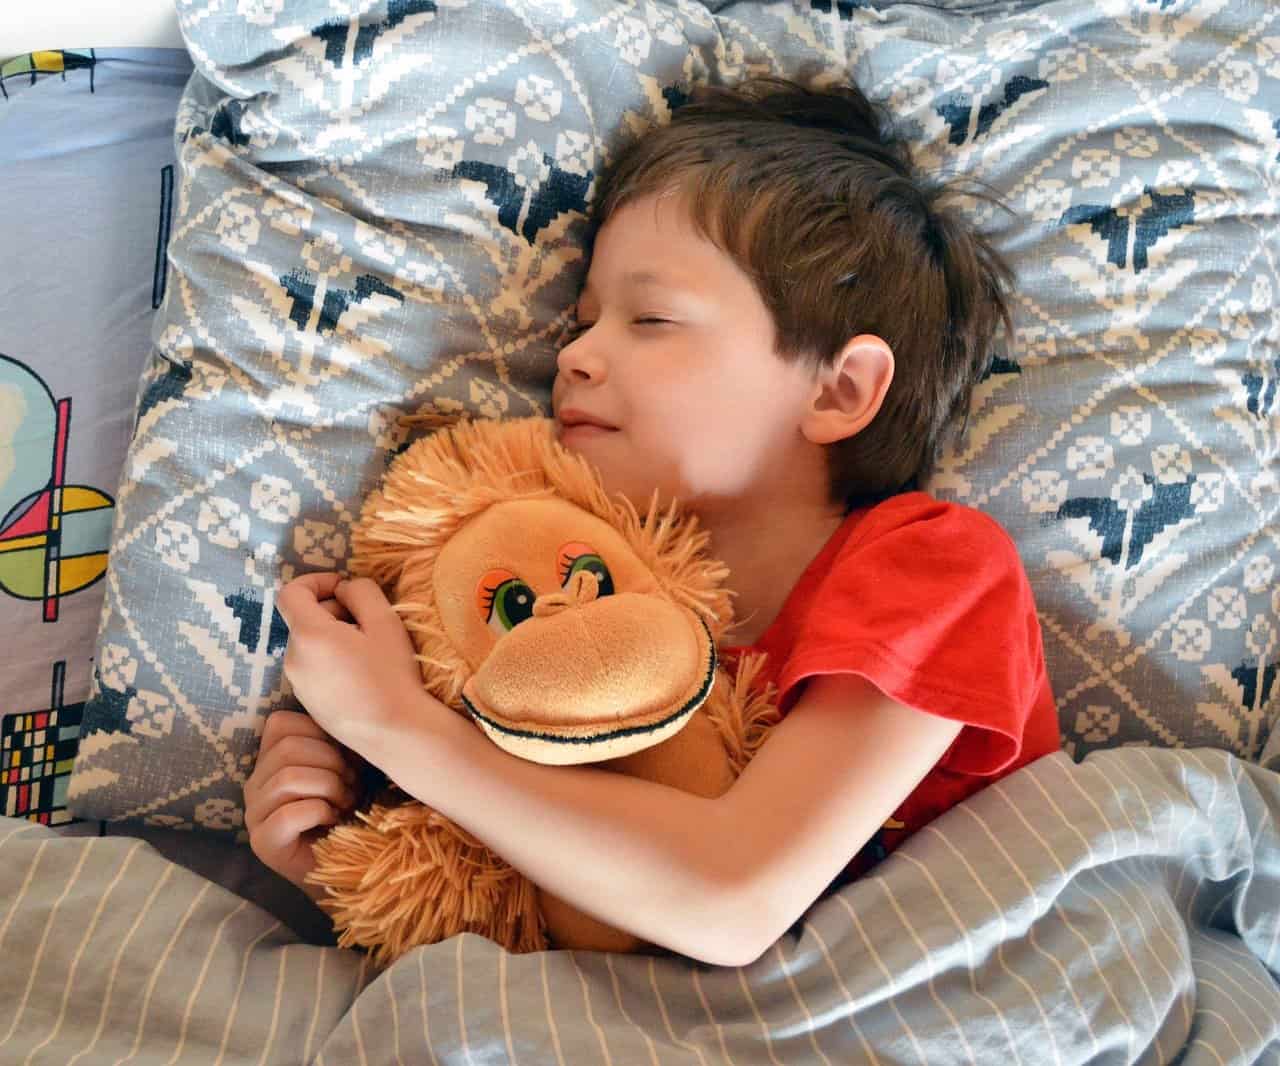 Boy sleeping with toy